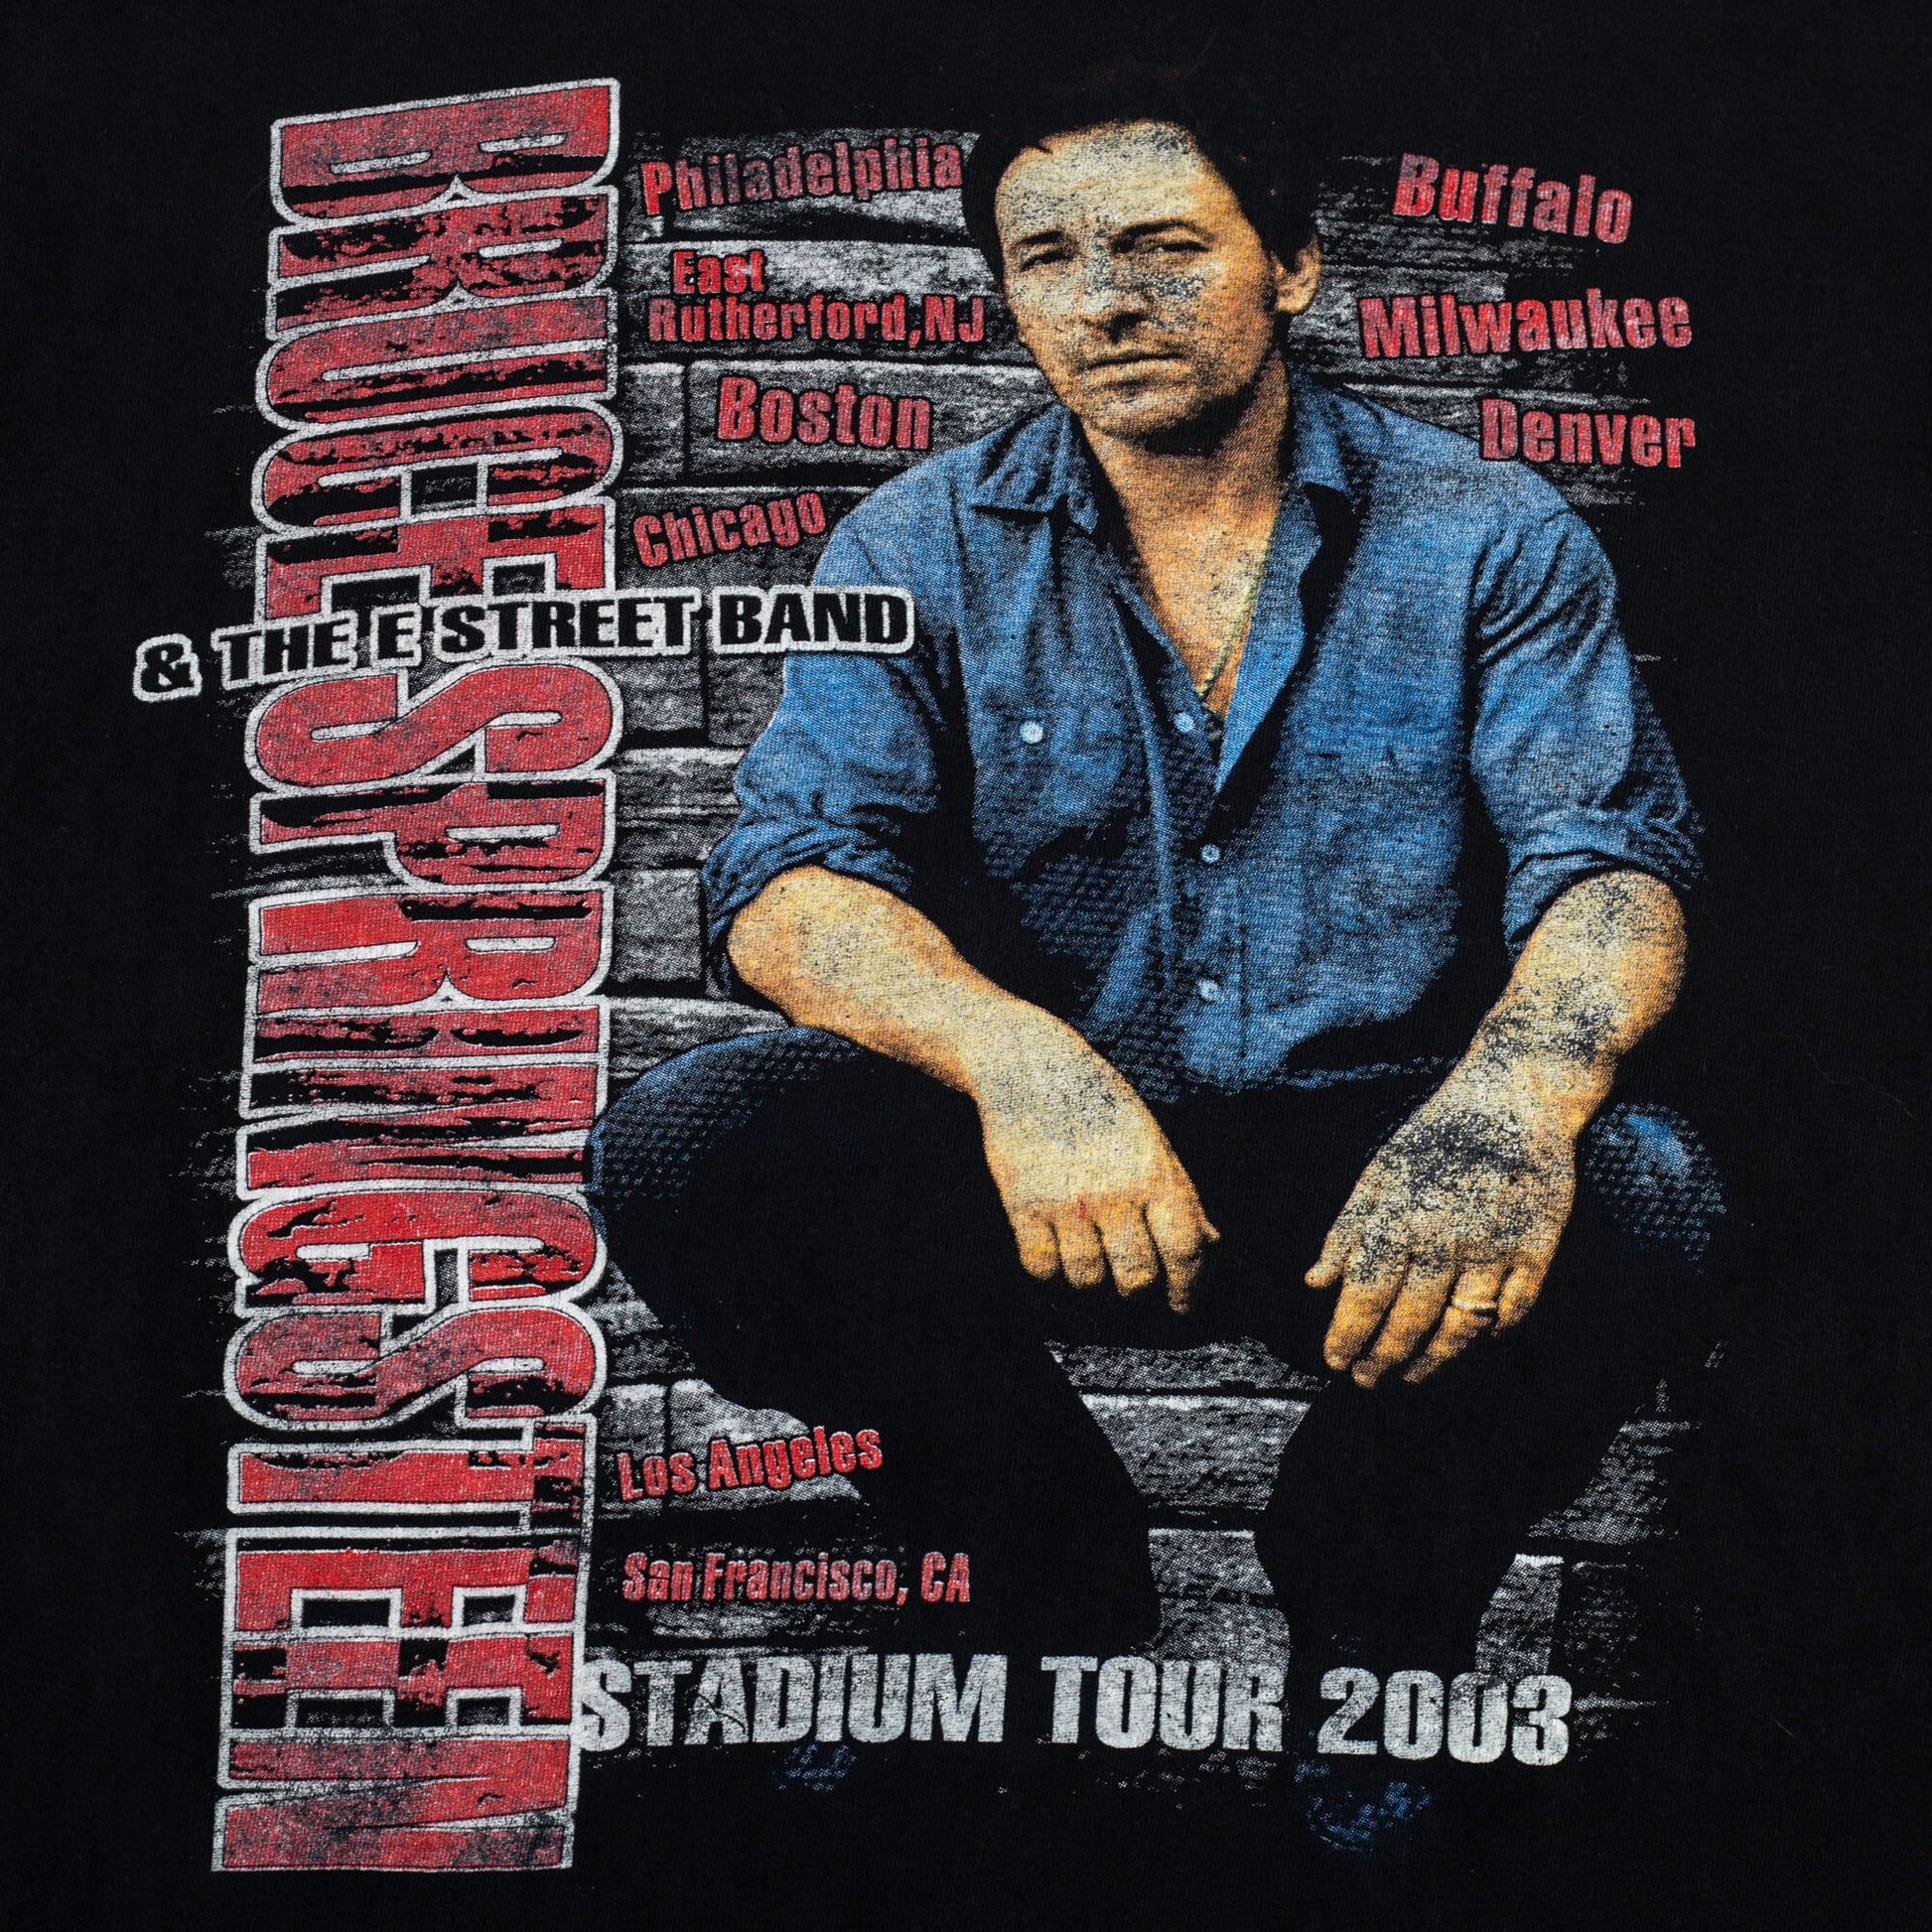 Vintage Bruce Springsteen & The E Street Band T Shirt - Men's Large, Women's XL | 2003 Stadium Tour Music Band Tee